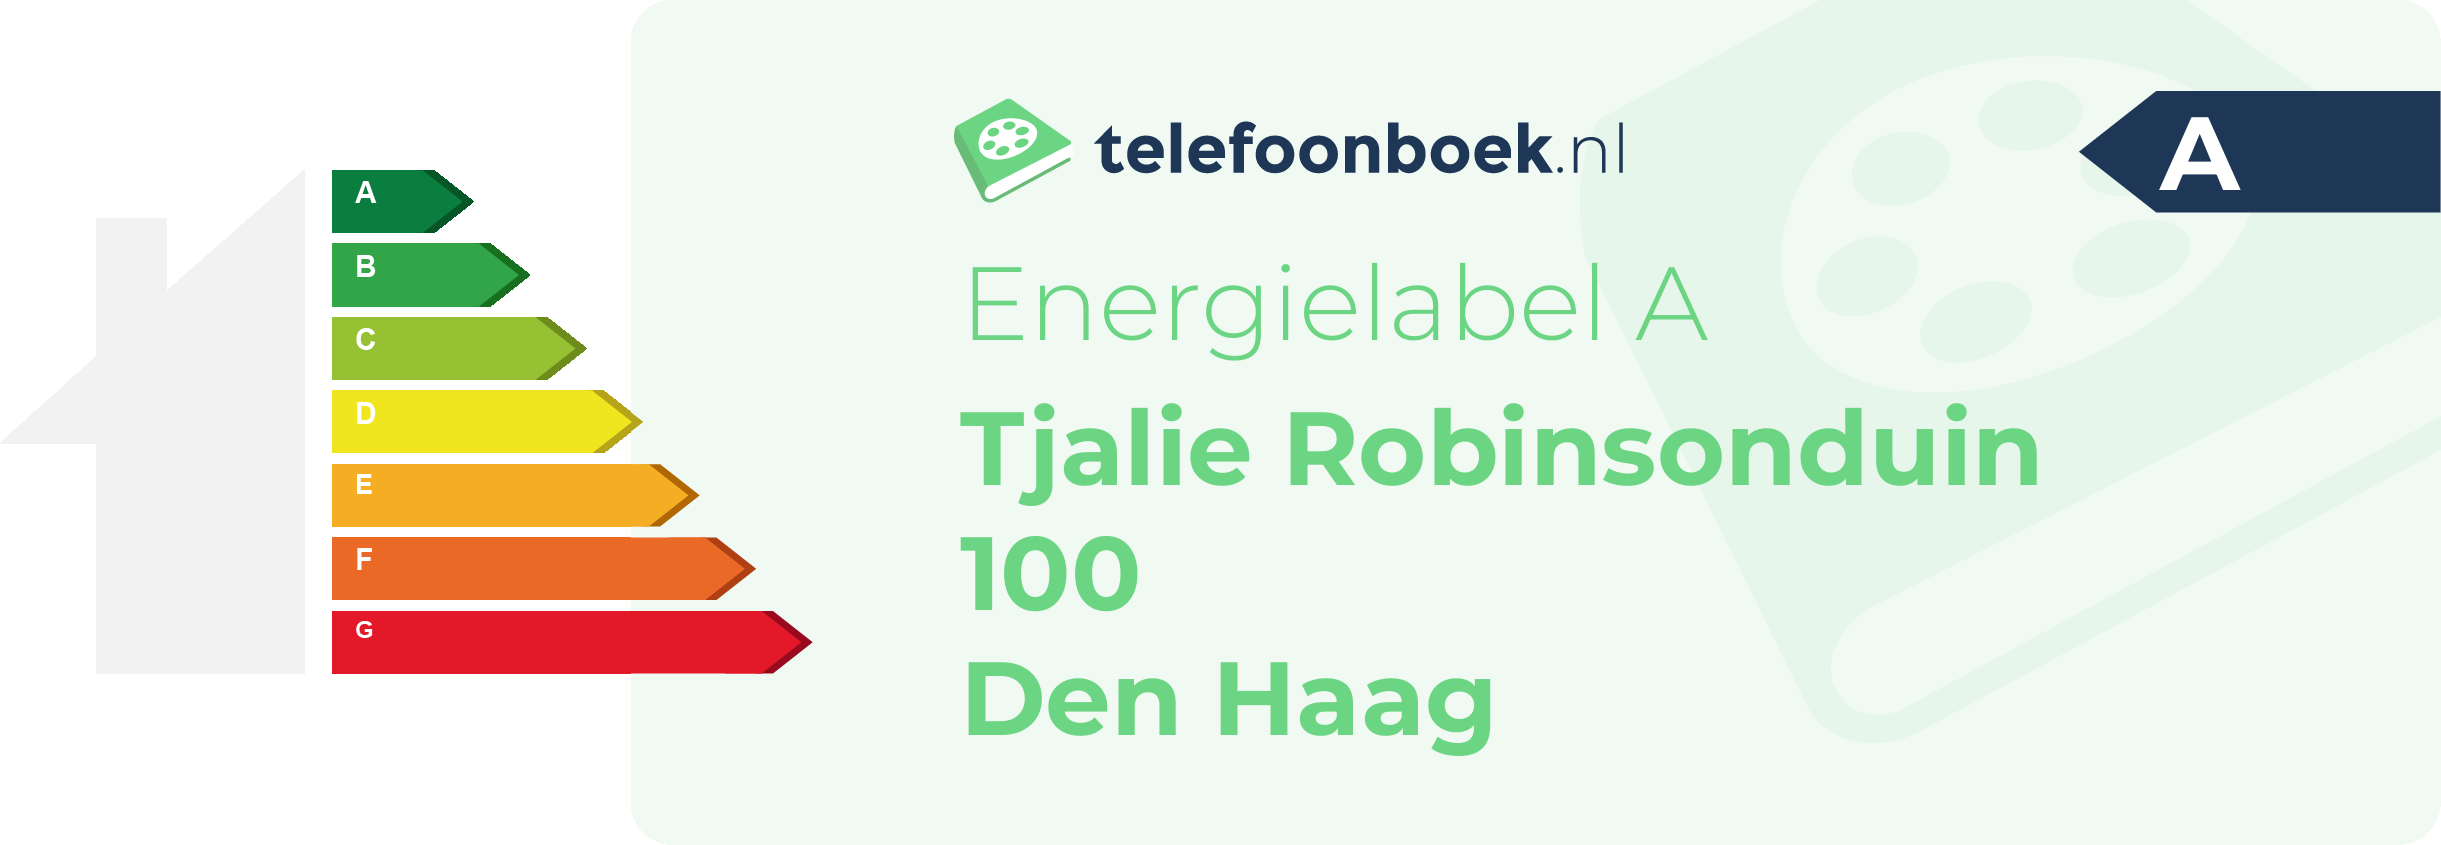 Energielabel Tjalie Robinsonduin 100 Den Haag